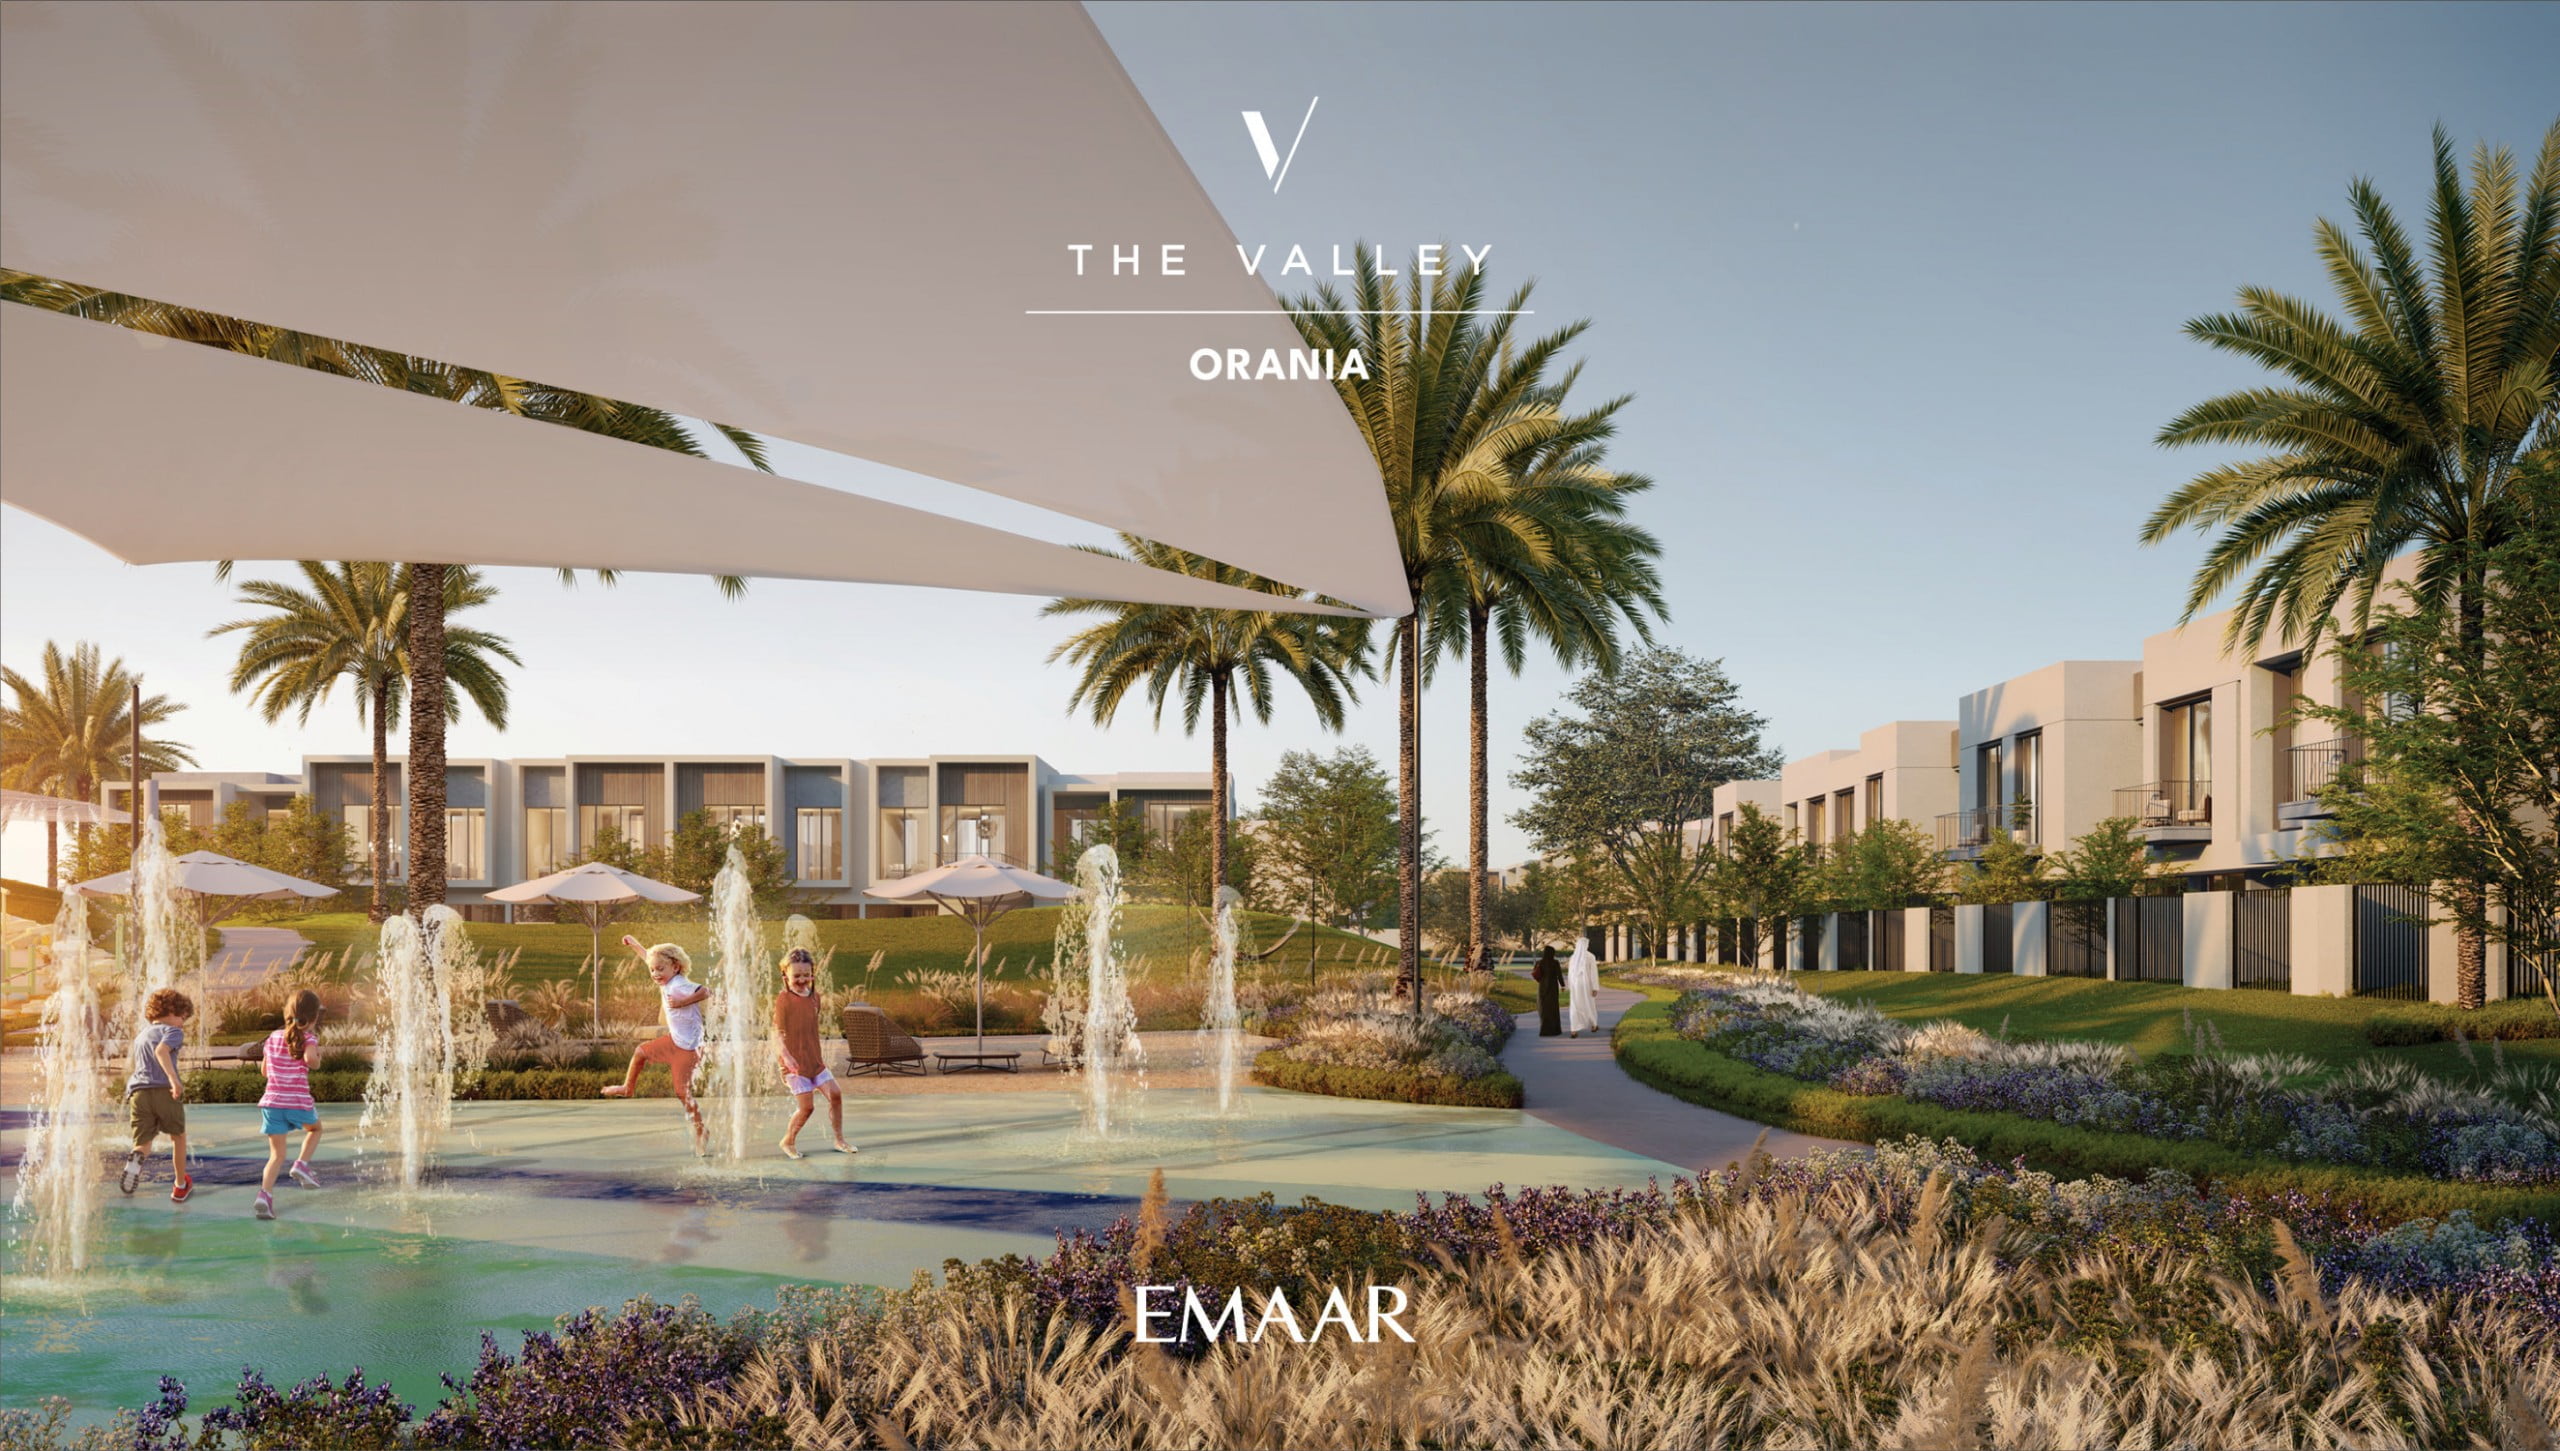 ORANIA THE VALLEY EMAAR 09 scaled - Immobilier Dubai